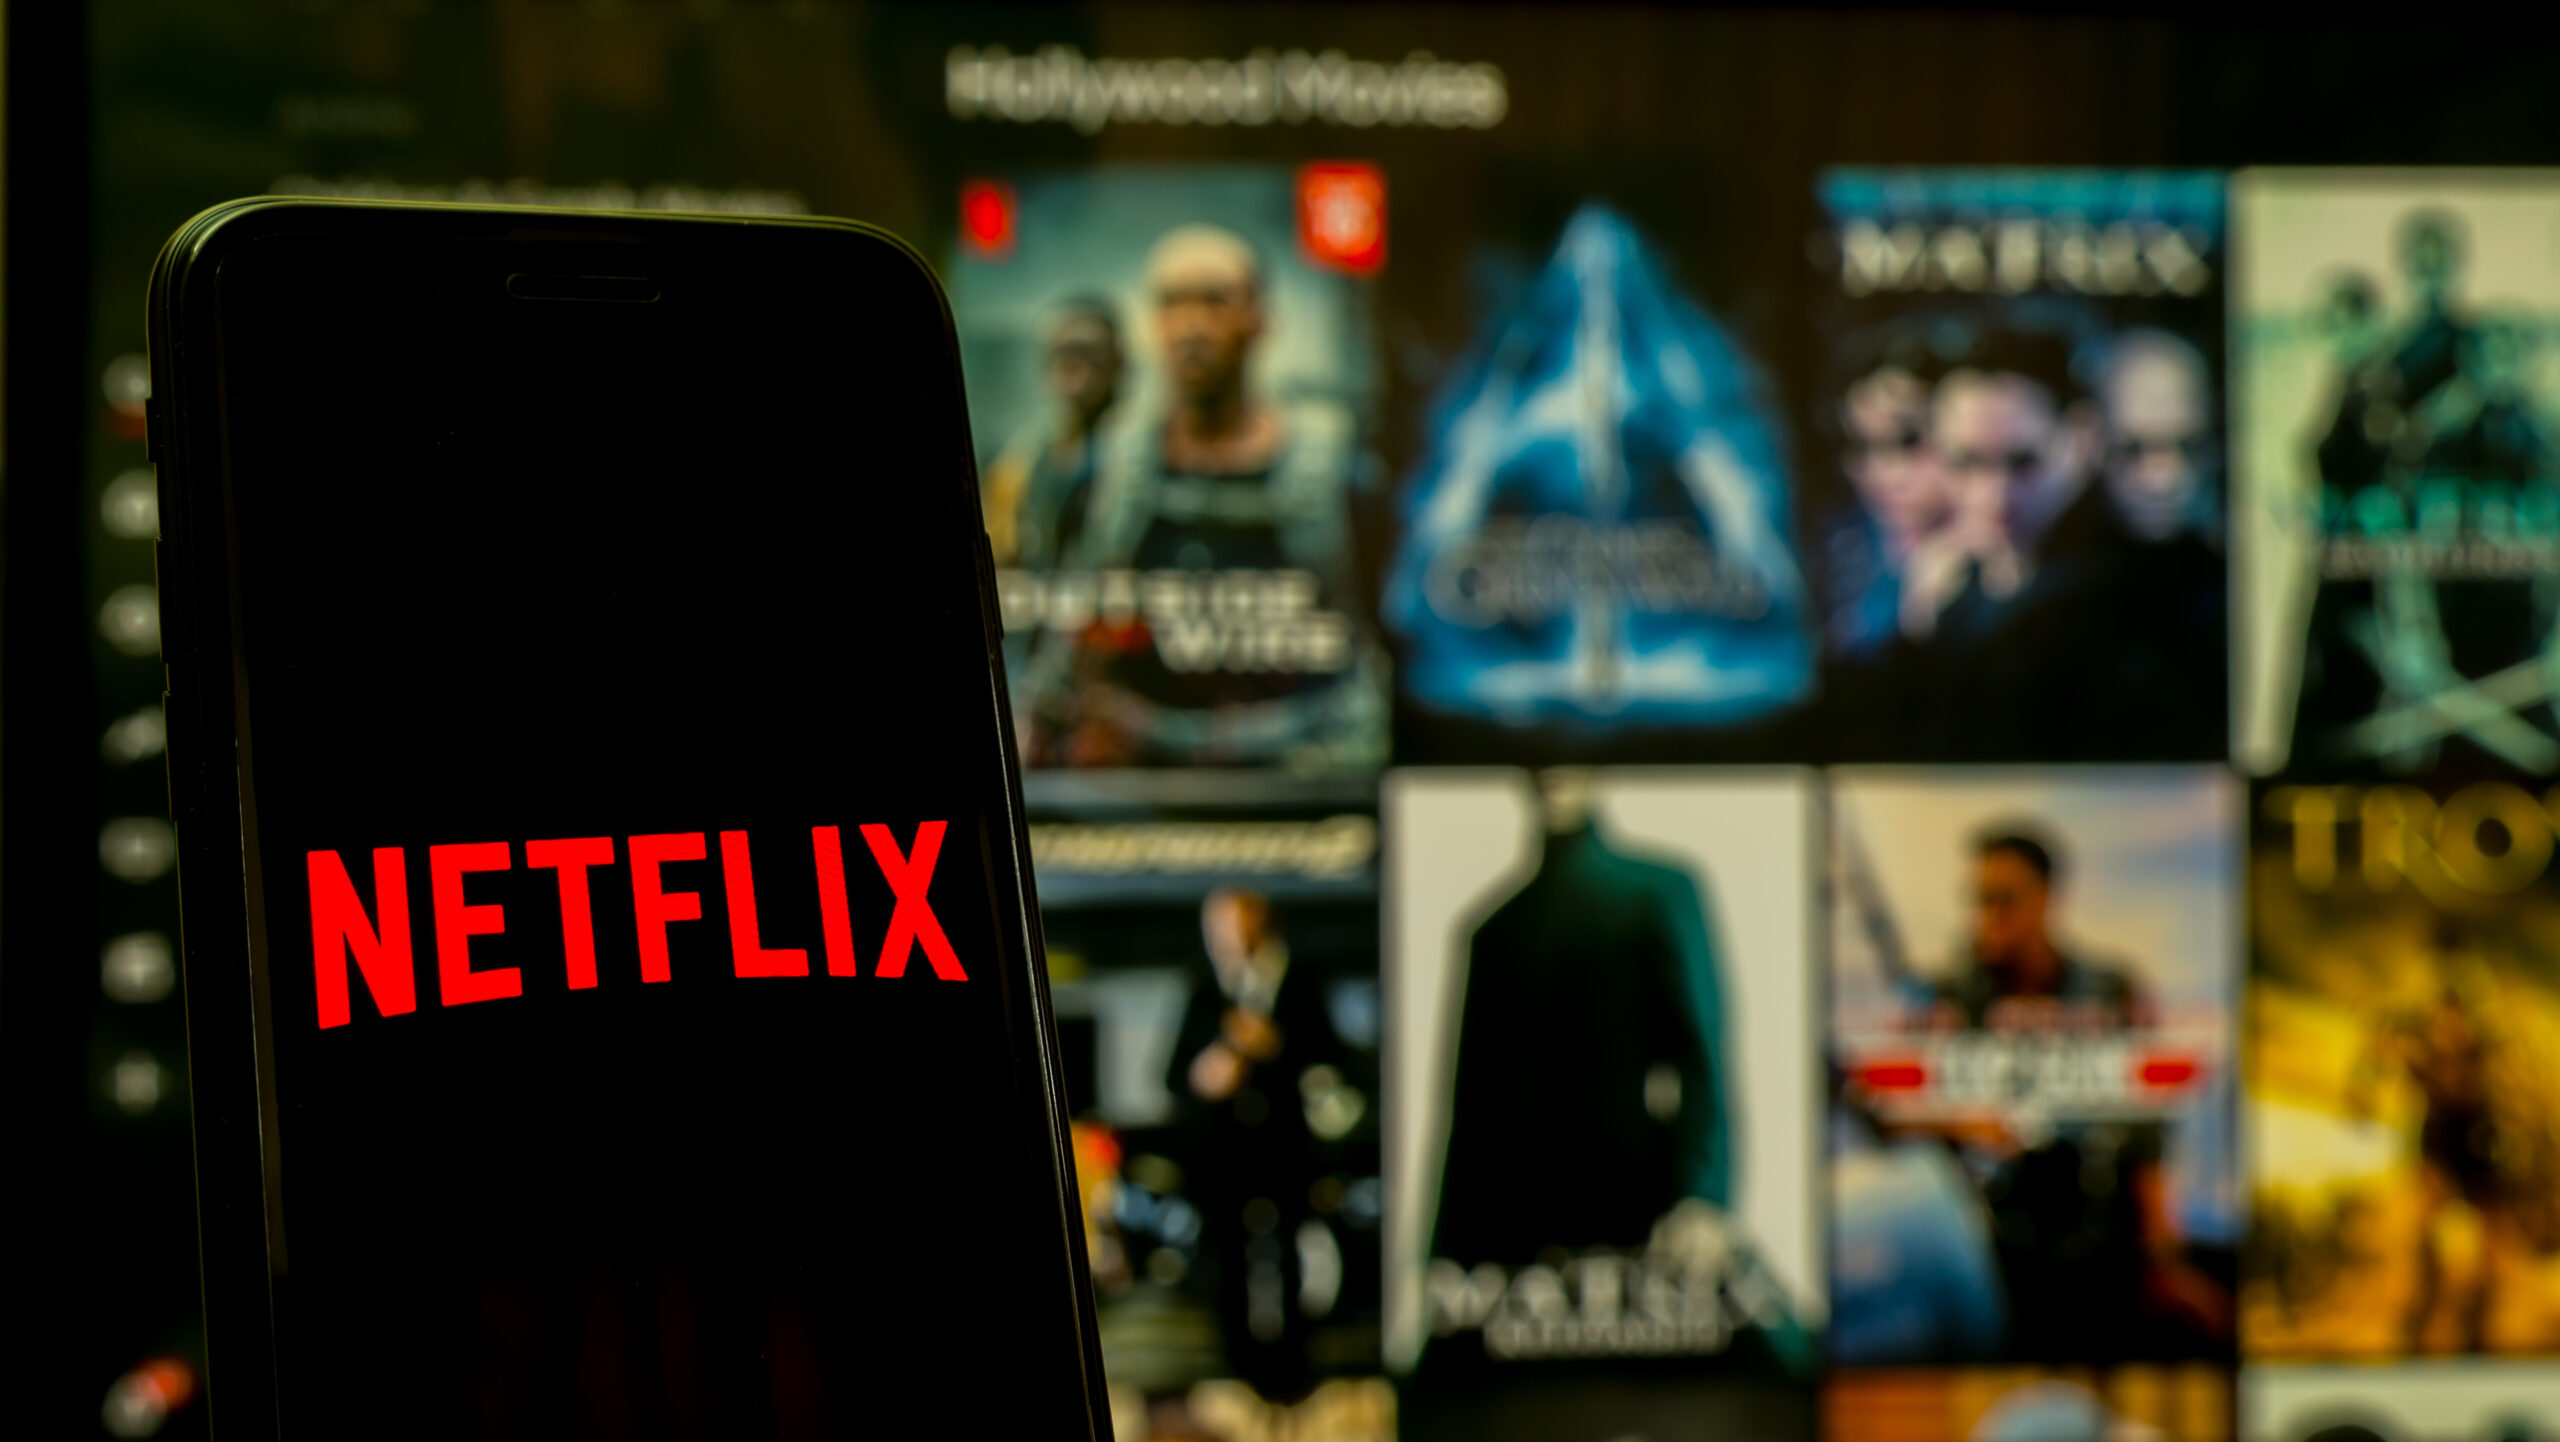 É fã terror? Netflix lançou suspense arrepiante com drama familiar